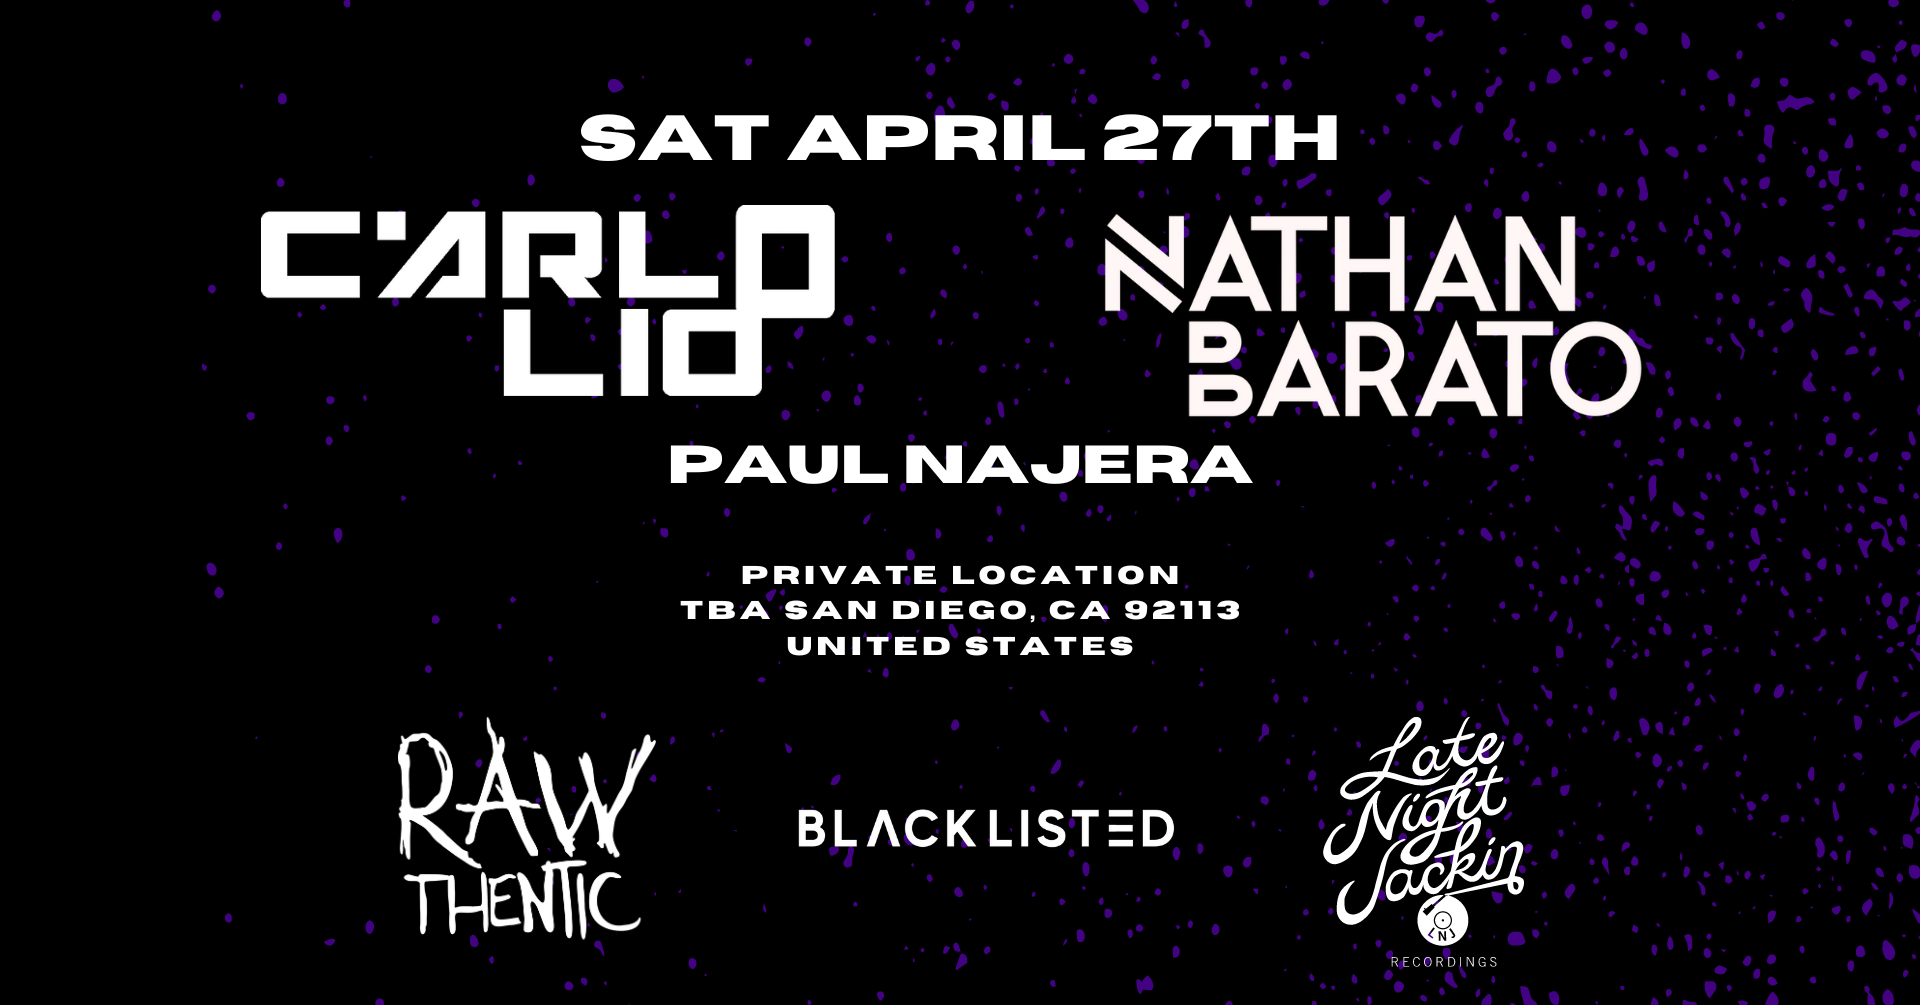 Blacklisted & Late Night Jackin present: Rawthentic Showcase W/ Carlo Lio & Nathan Barato - Página frontal